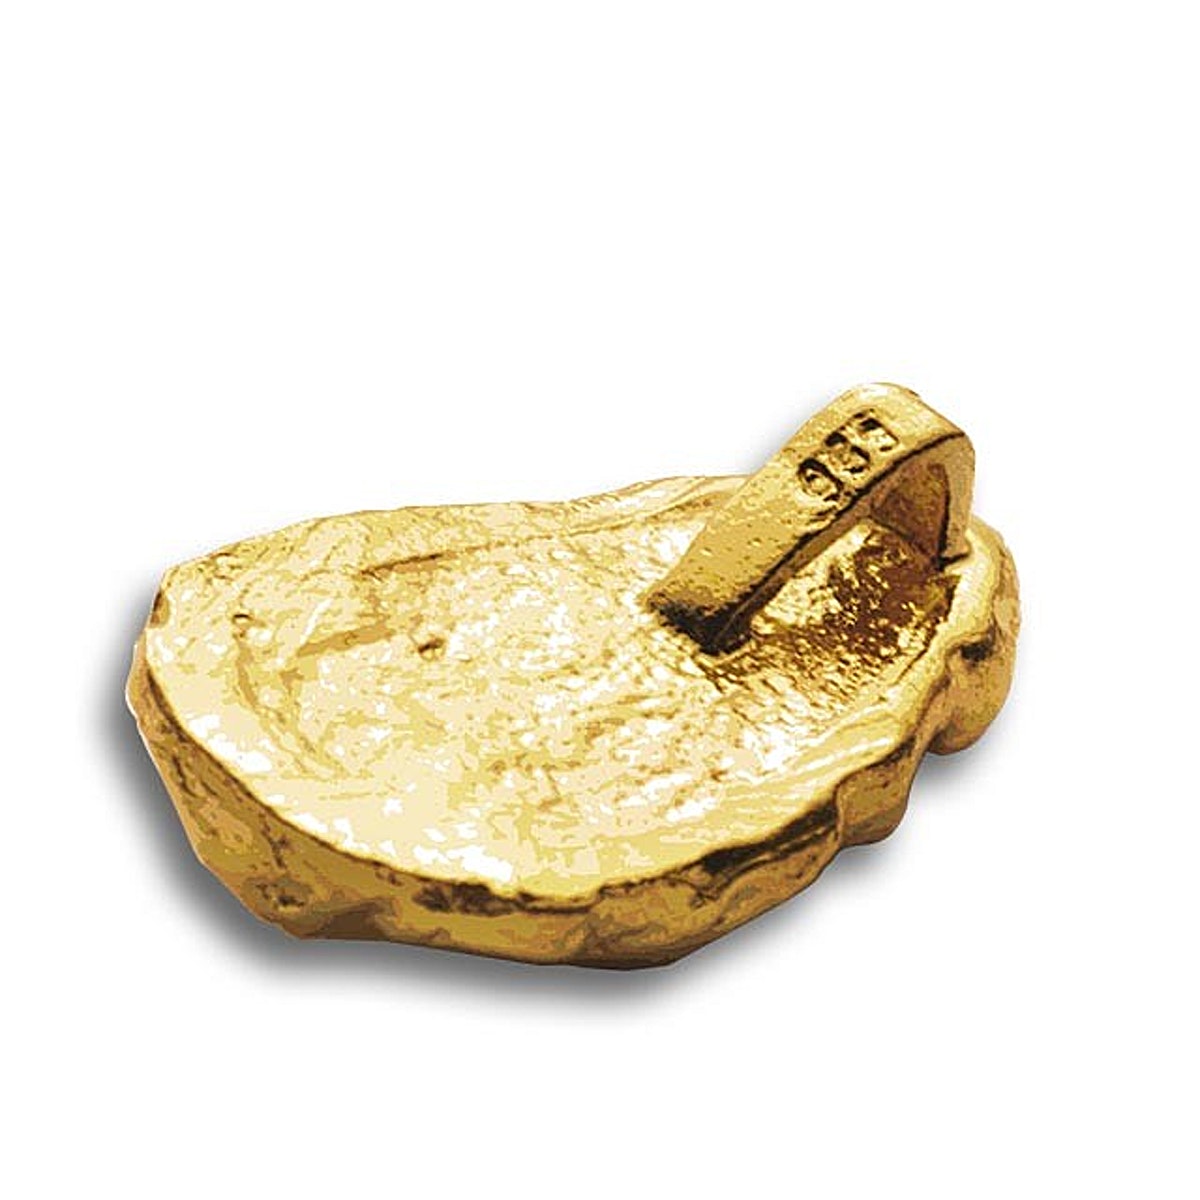 Degussa gold nugget pendant - 10 g